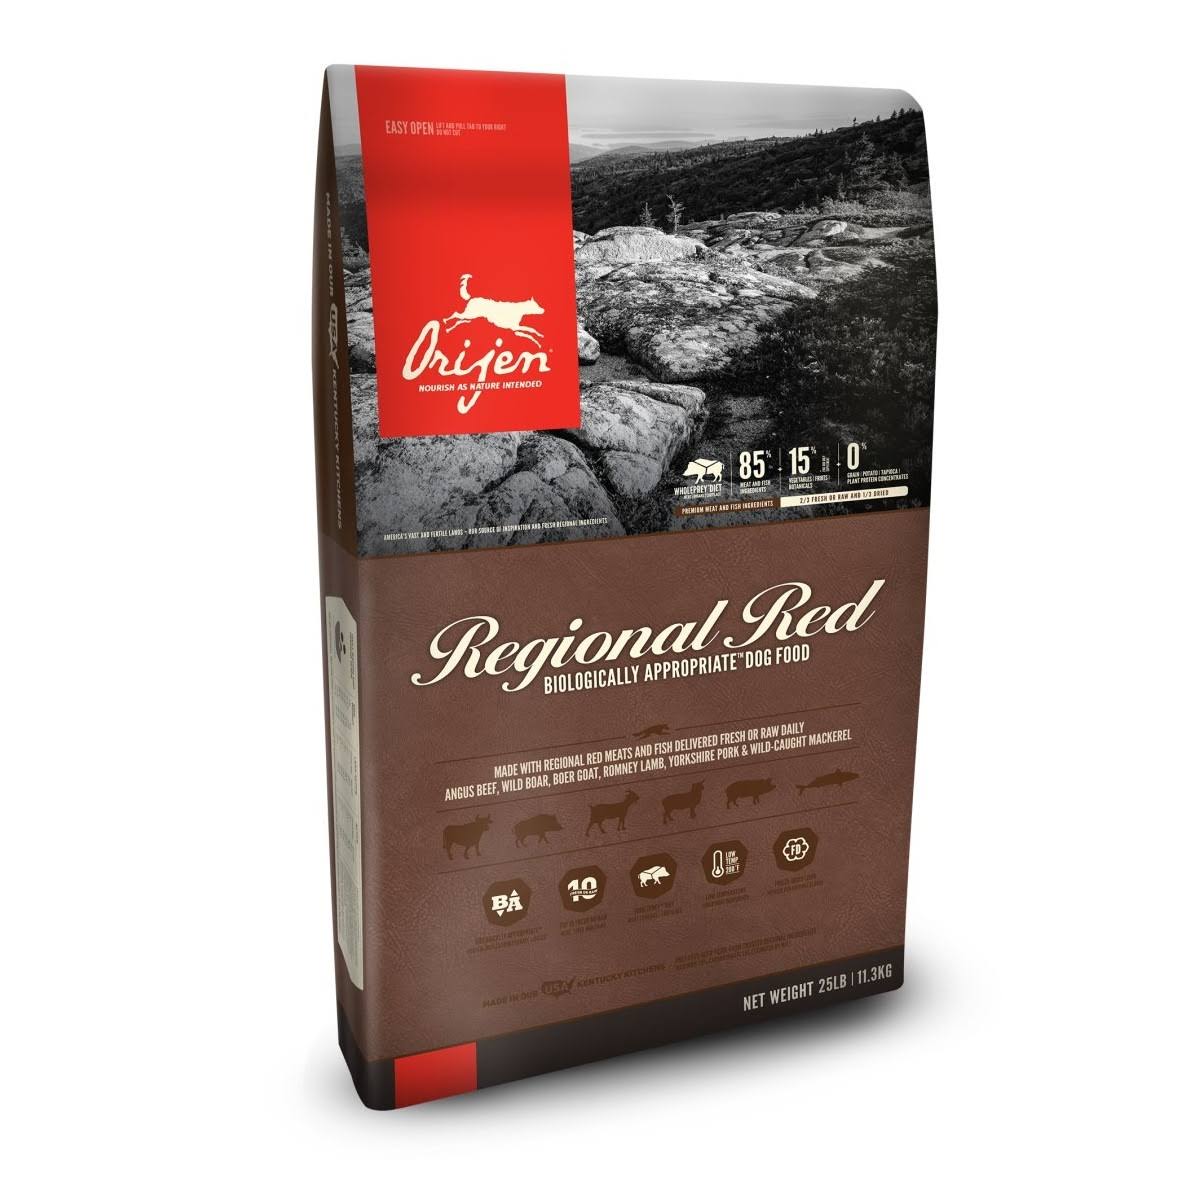 Orijen Regional Red Grain-Free Dry Dog Food - 25 lb. Bag